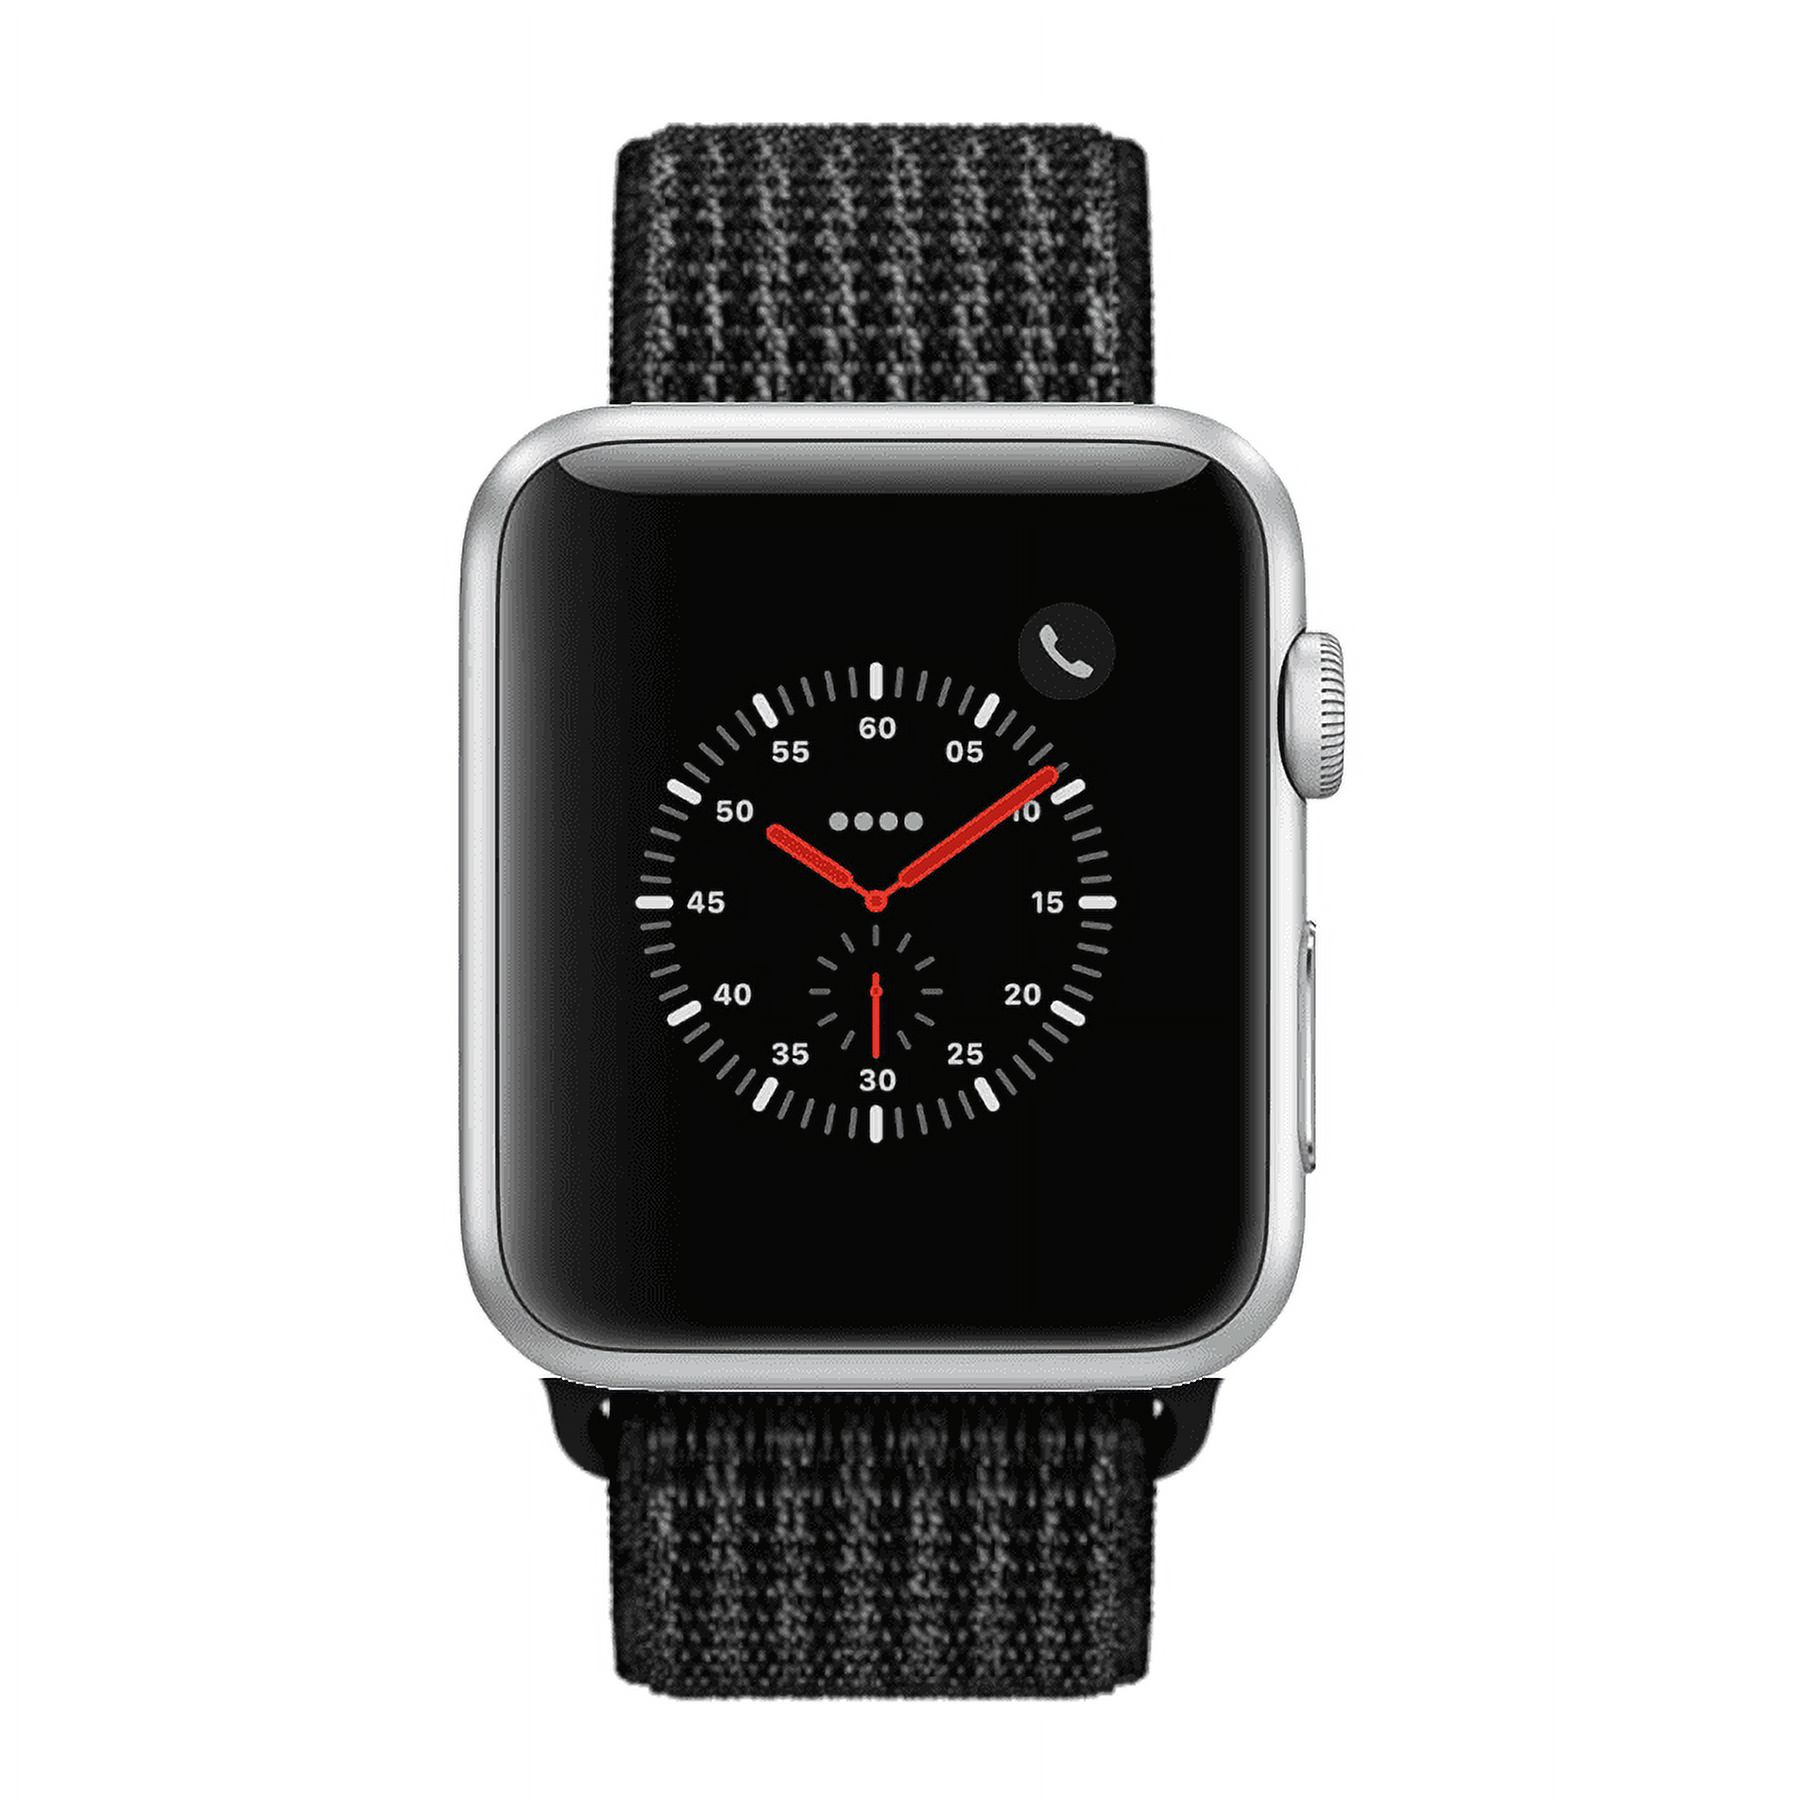 Apple Watch Series 2 - 42mm, WiFi - Silver with Black Sport Loop - Used - image 1 of 1